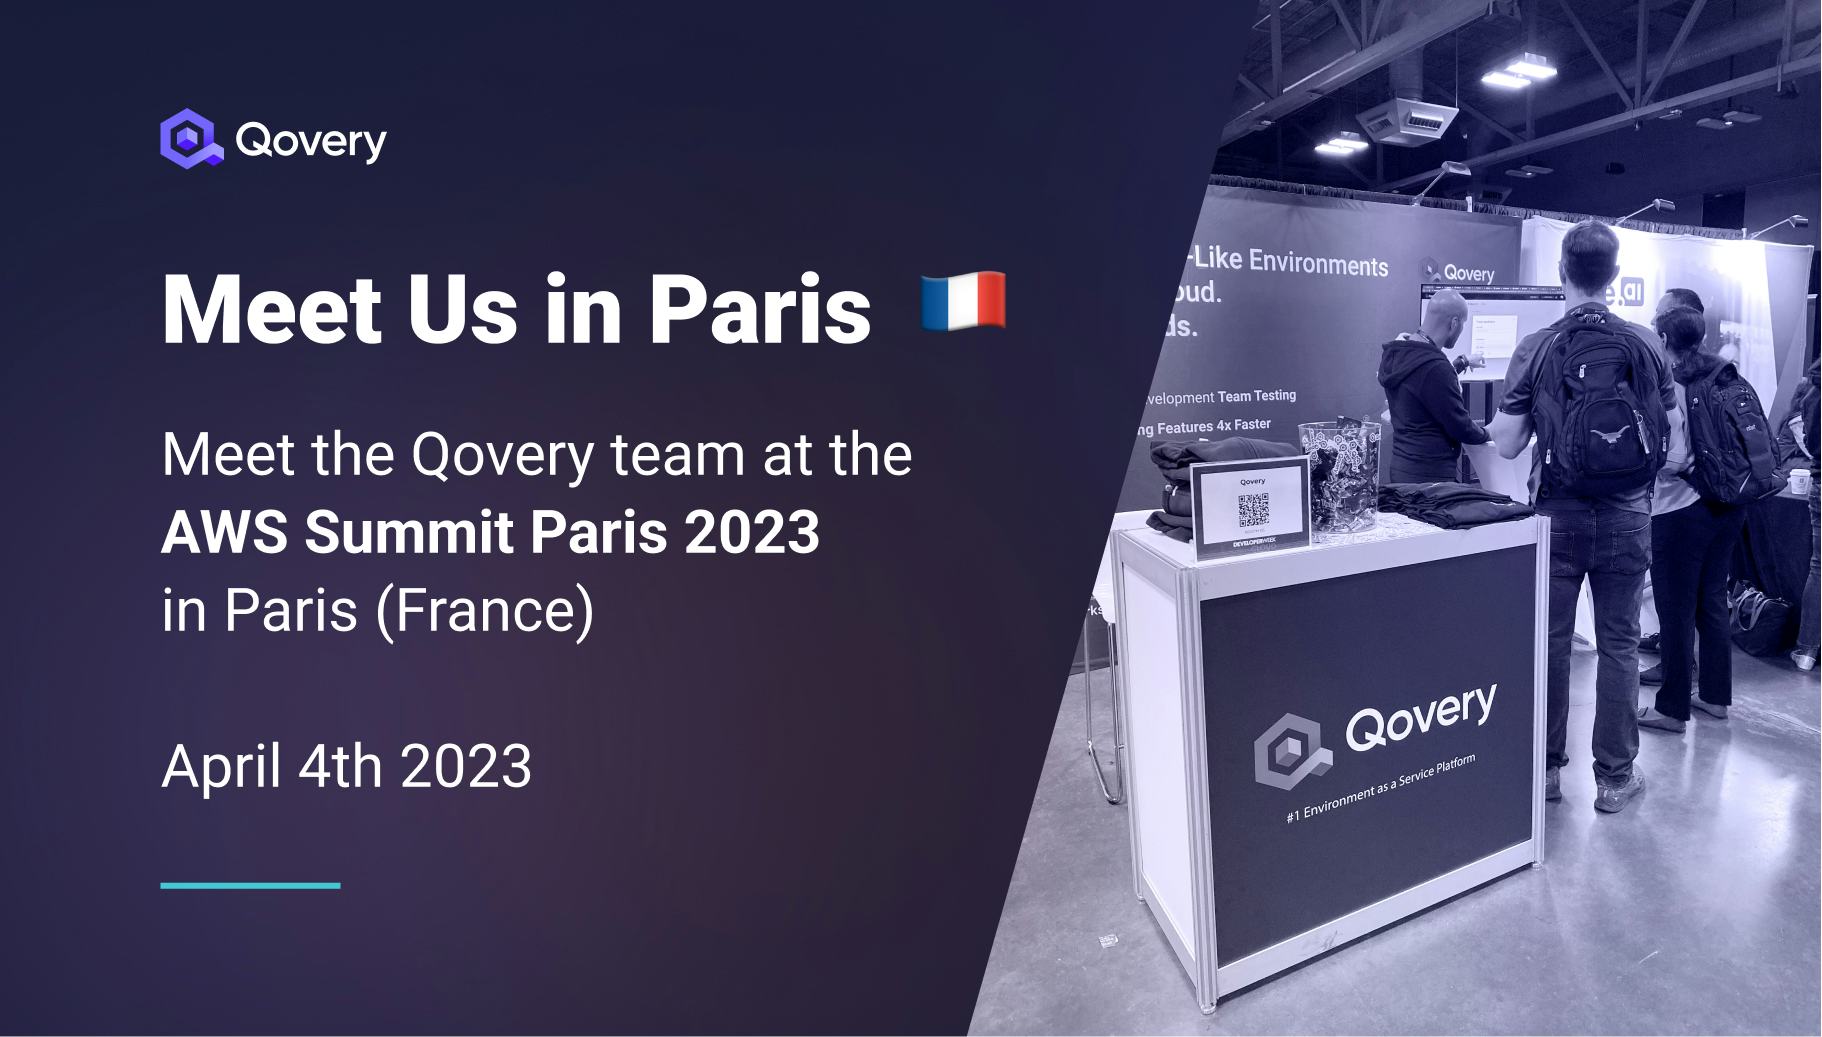 AWS Summit Paris 2023 - Meet the Qovery Team  - Qovery